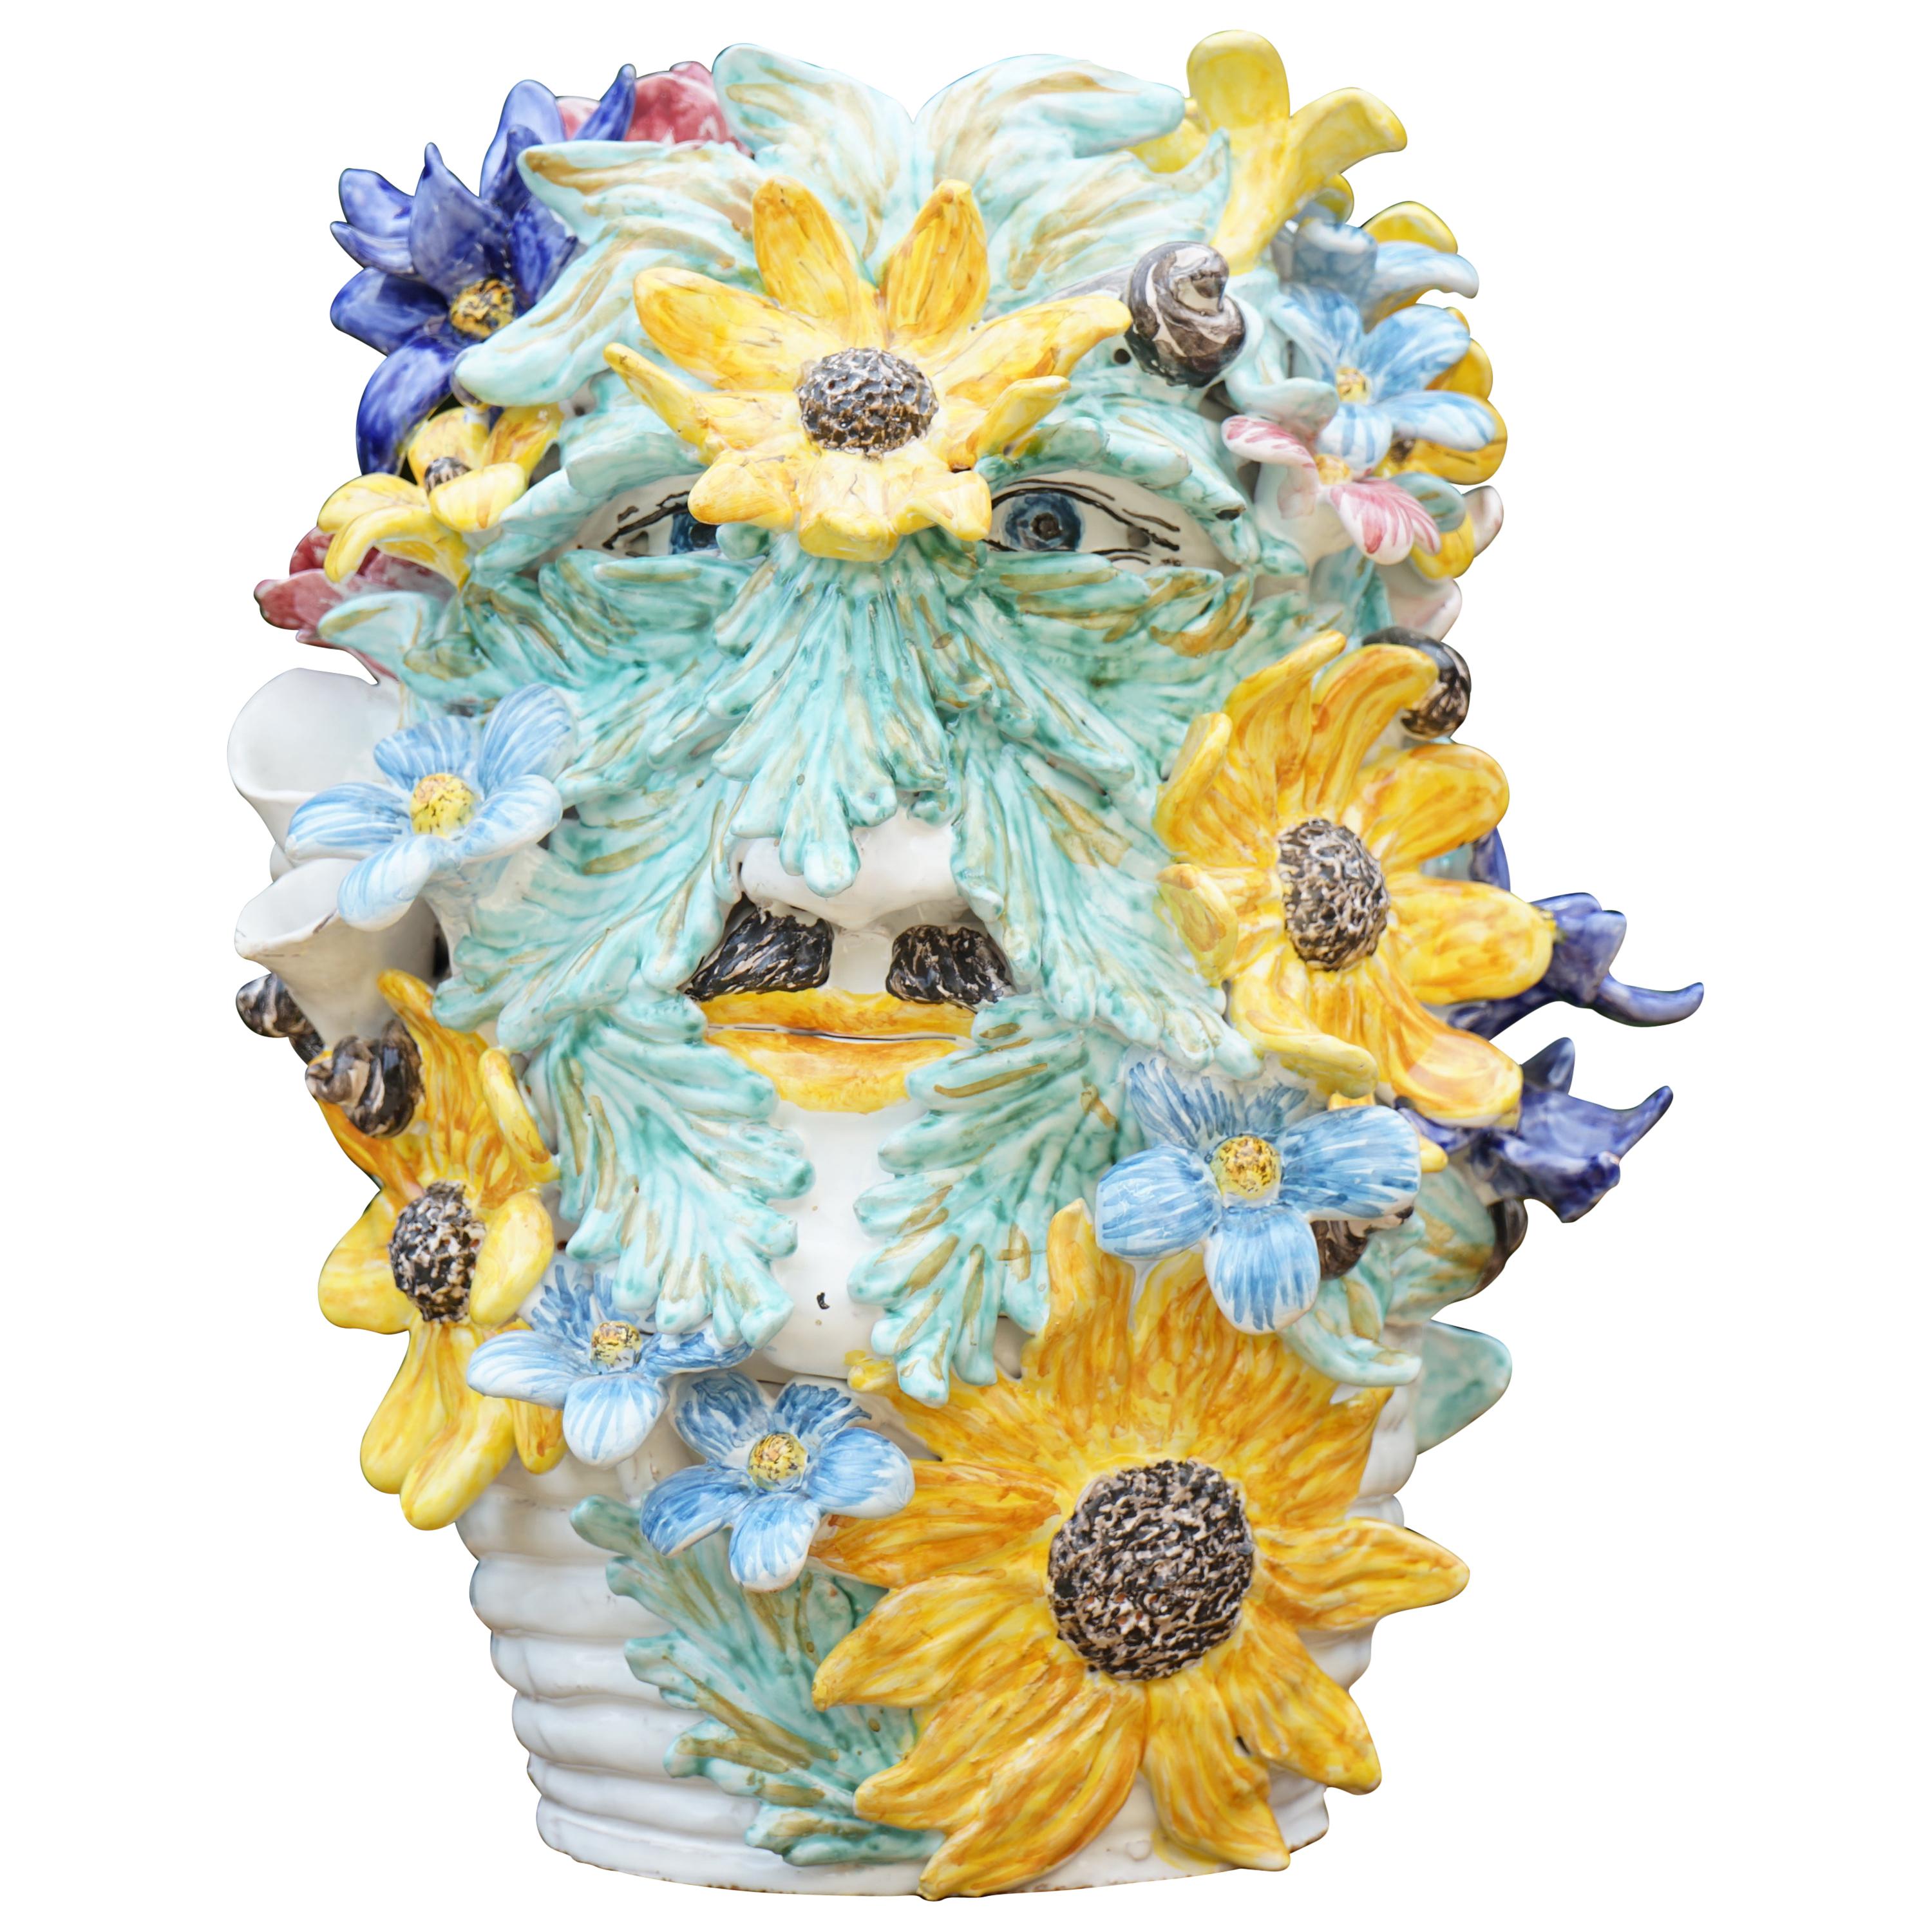 Caltagirone Keramik-Skulptur-Vase Modell Santino